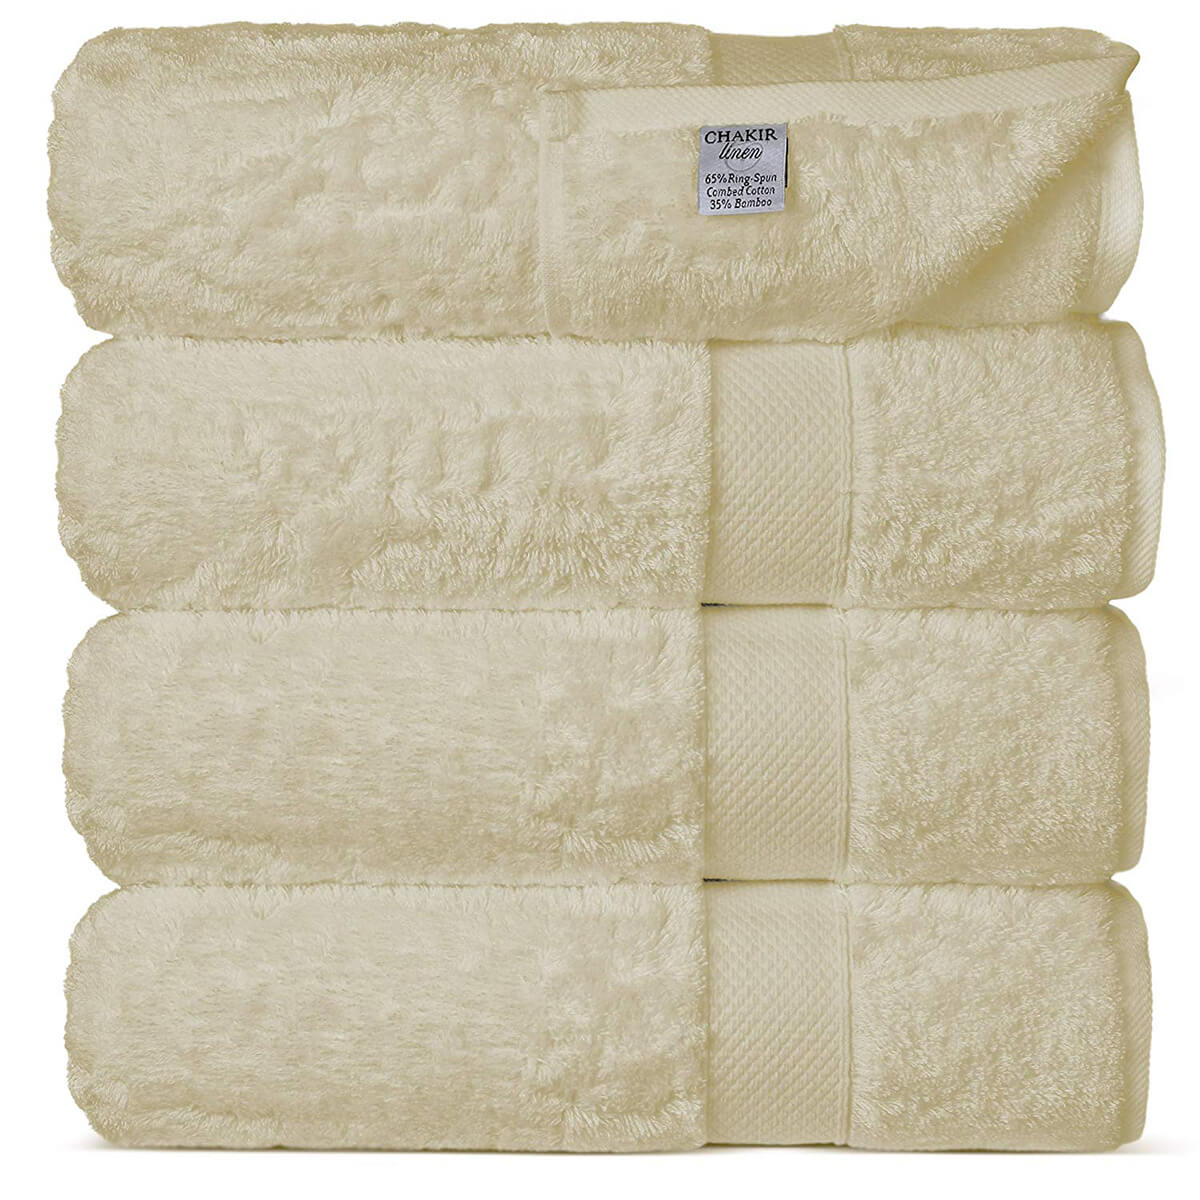 Modus Vivendi Towel Bath/Spa Towels Beach High Cotton Quality Soft PINK S1630 